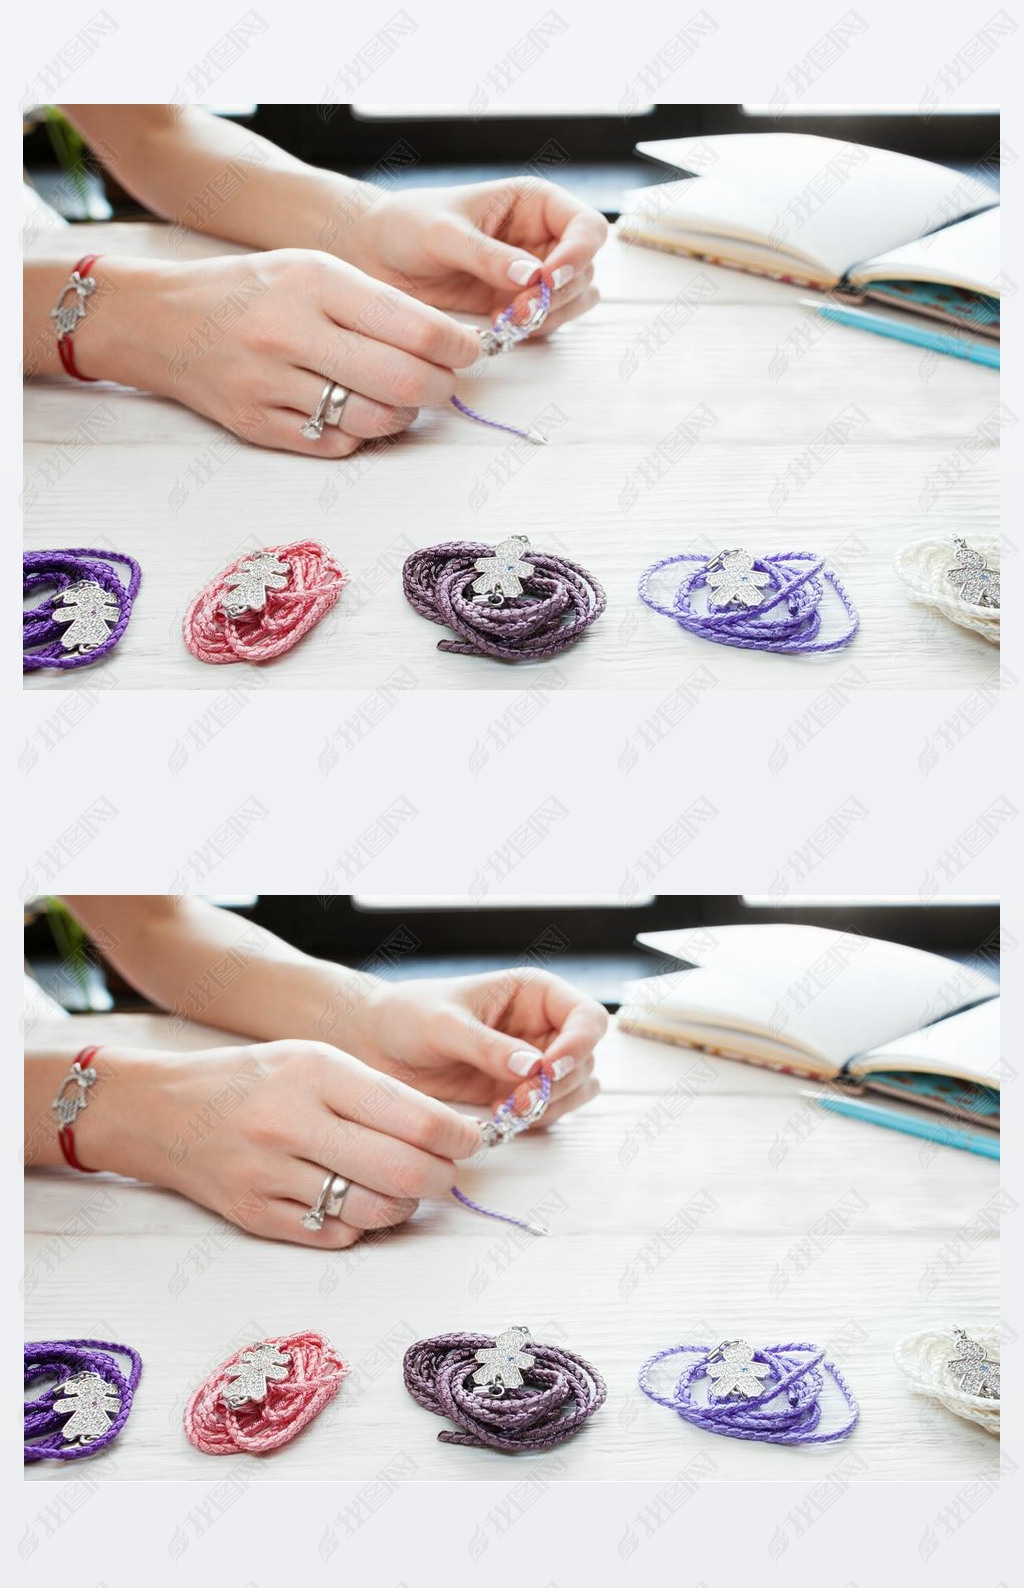 Woman making homemade bracelets